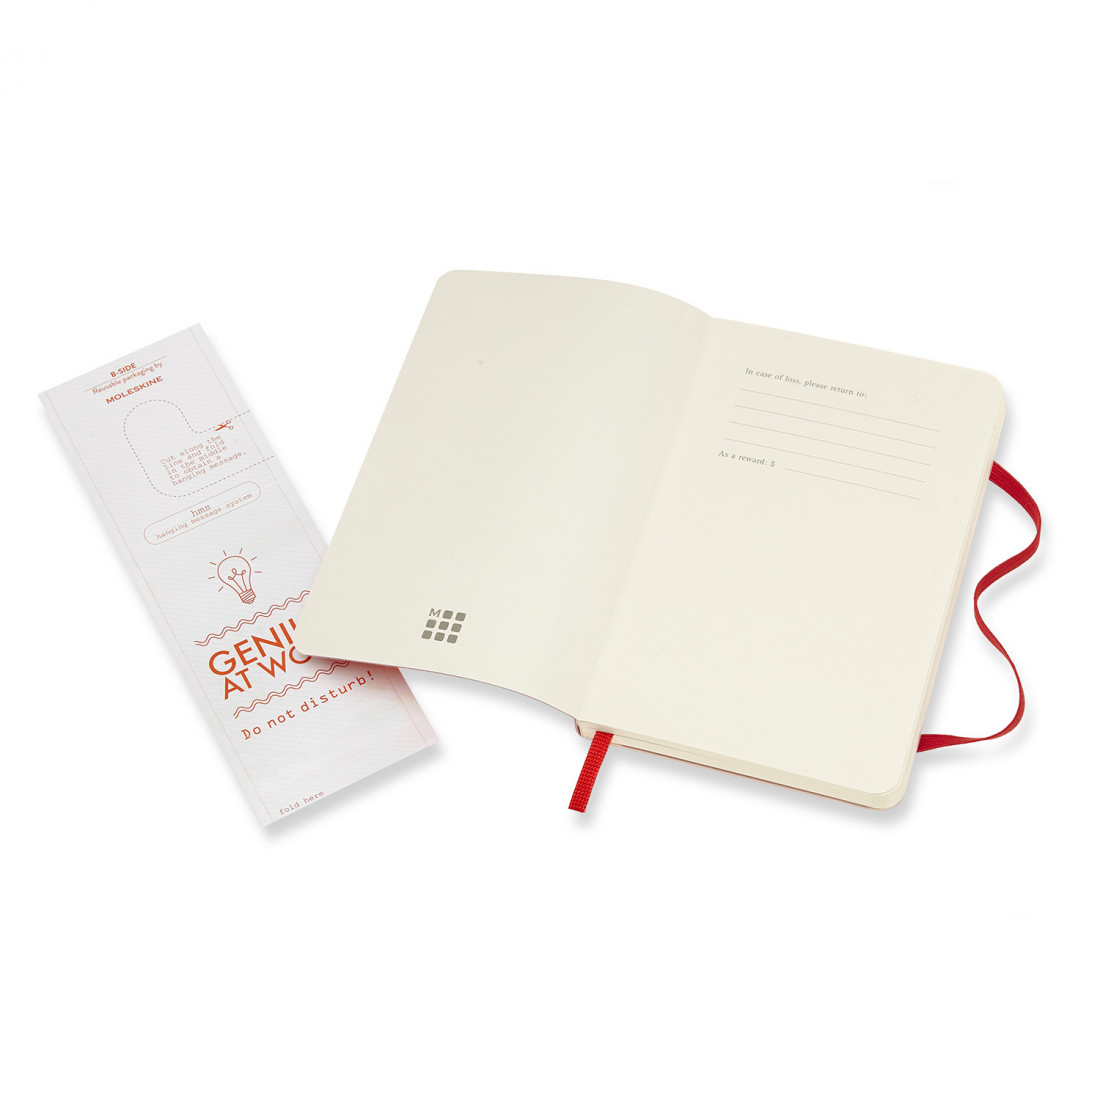 Notebook Pocket 9x14 Ruled Red Soft Cover Moleskine